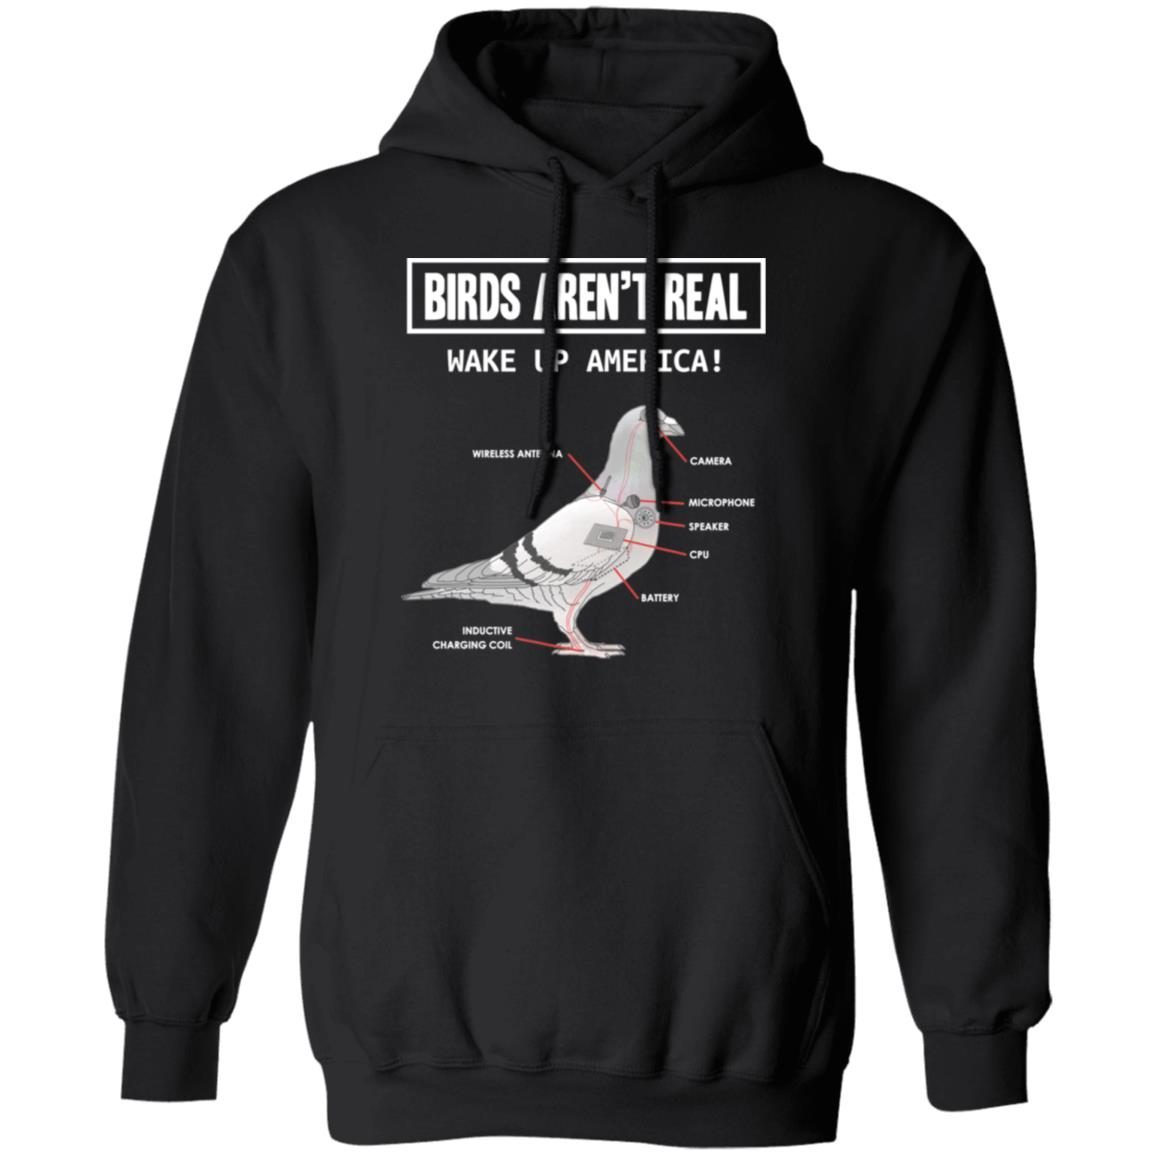 Birds Aren’t Real Make Up America shirt 7